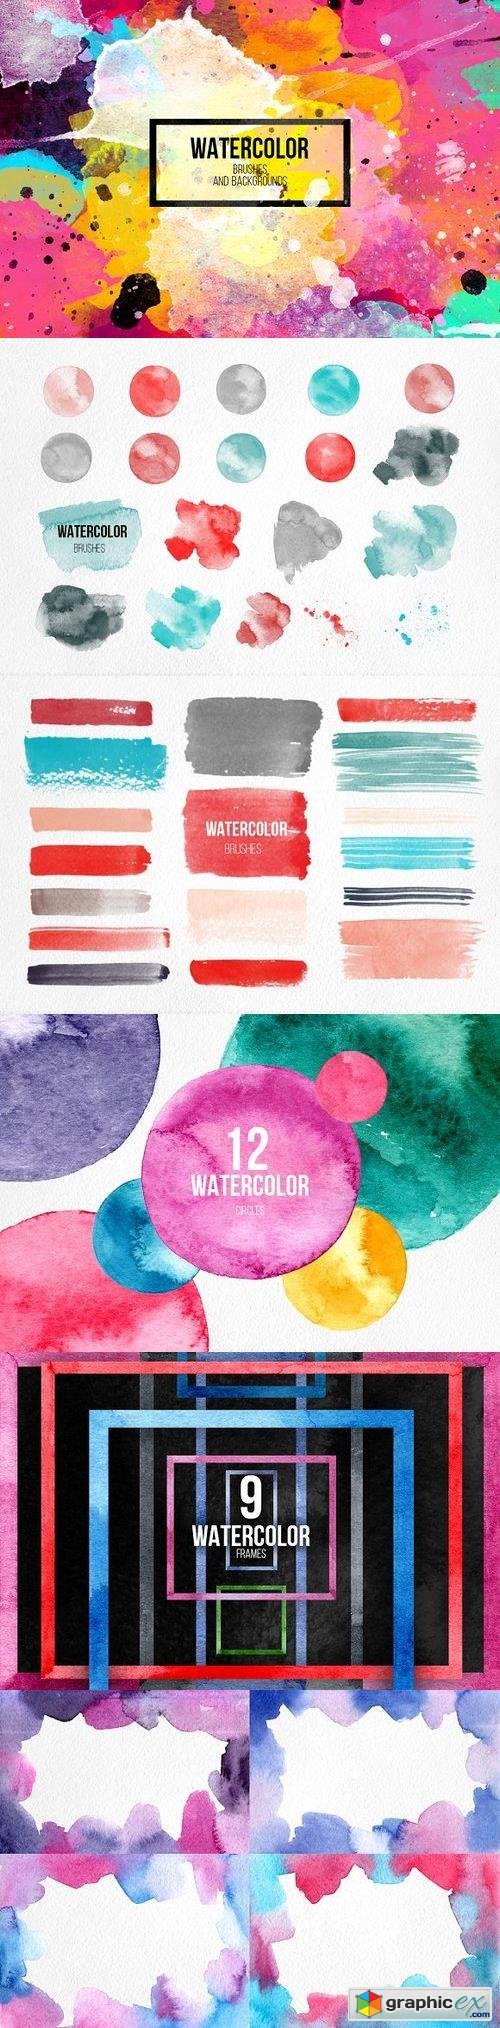 Watercolor brushes+design elements